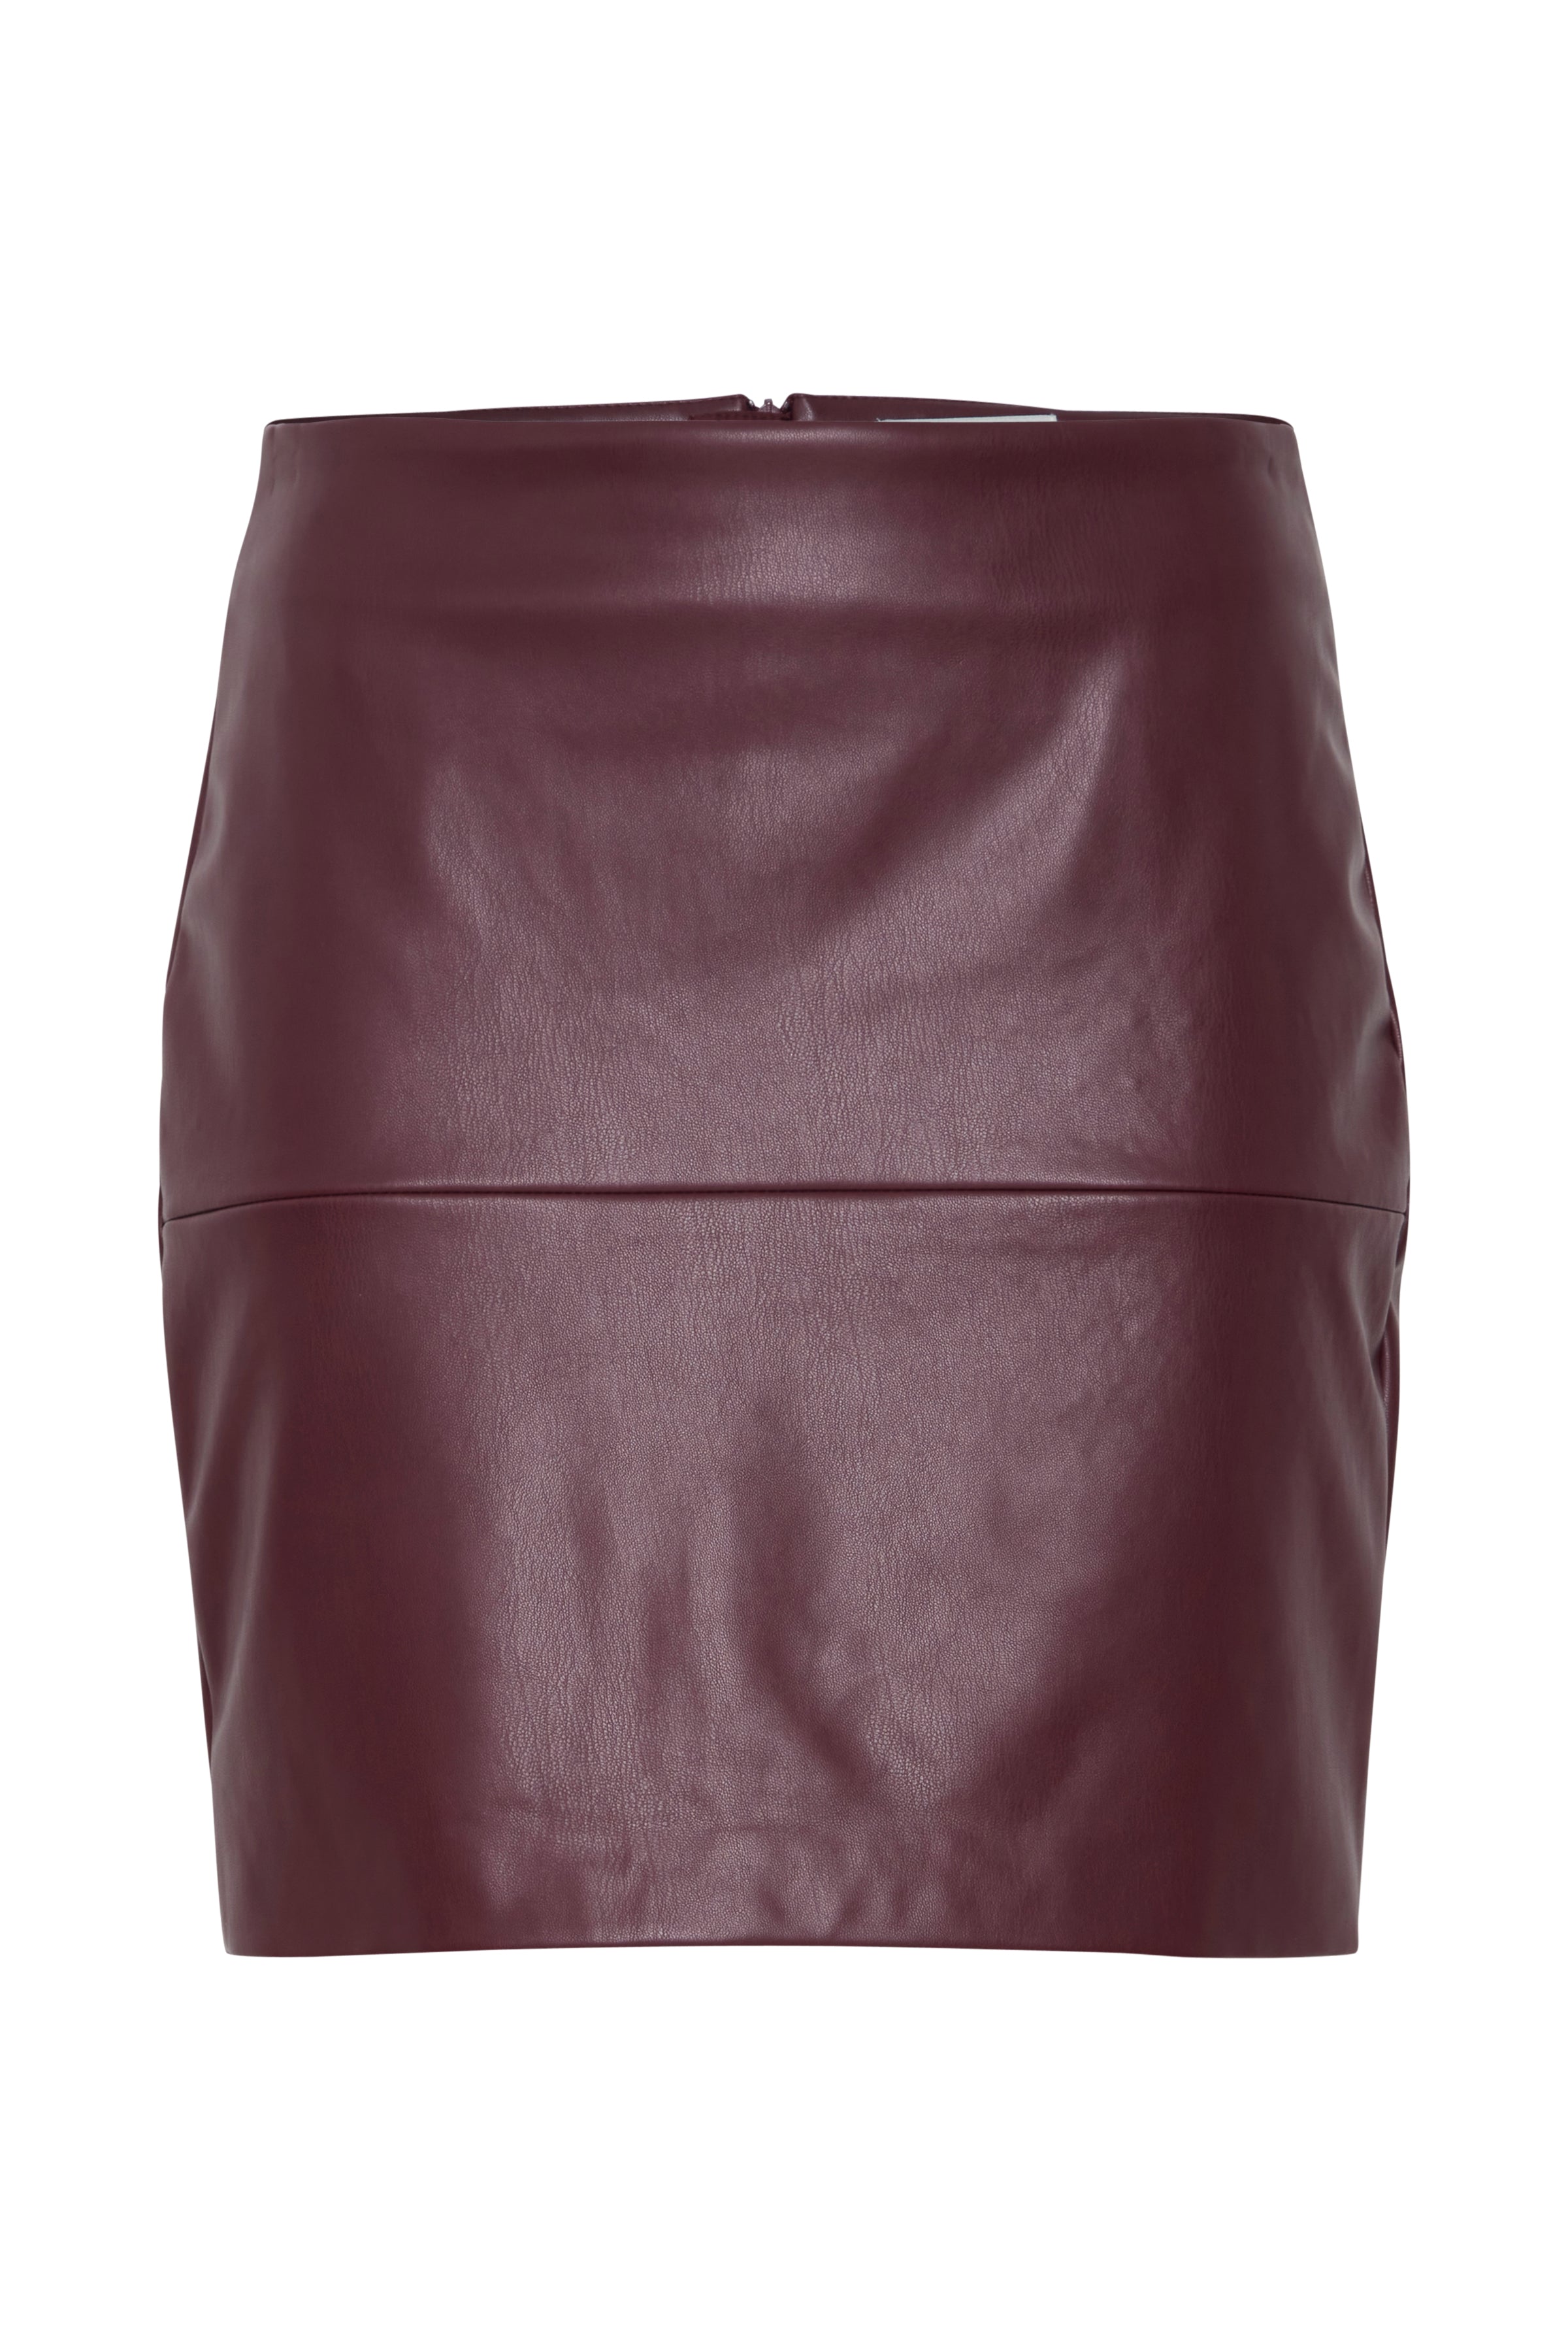 Ihcomano burgundy leather skirt | Ichi